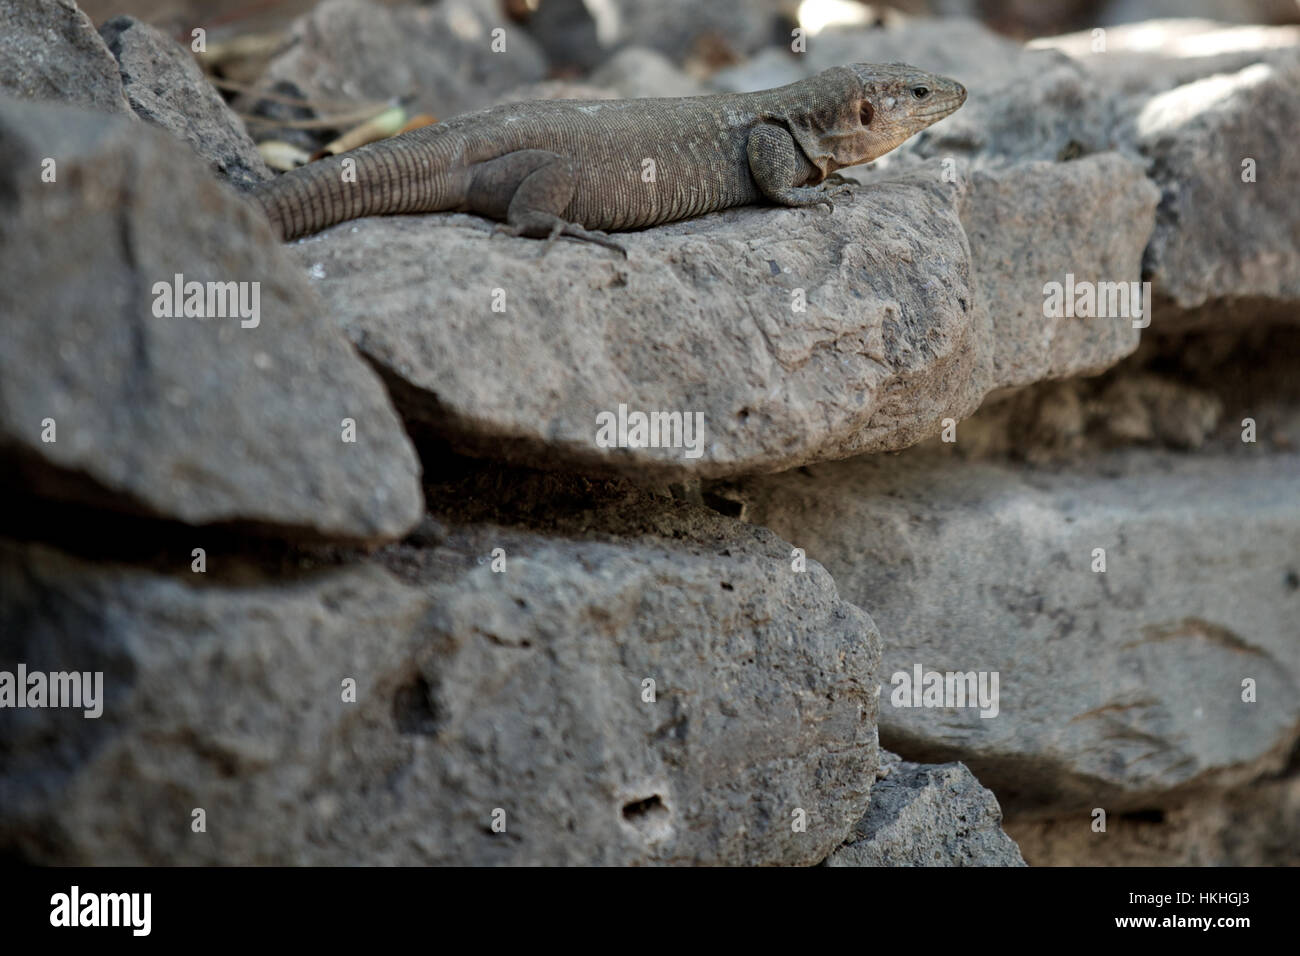 lizard on rock at zoo. animal, swift, reptile, alert. Stock Photo